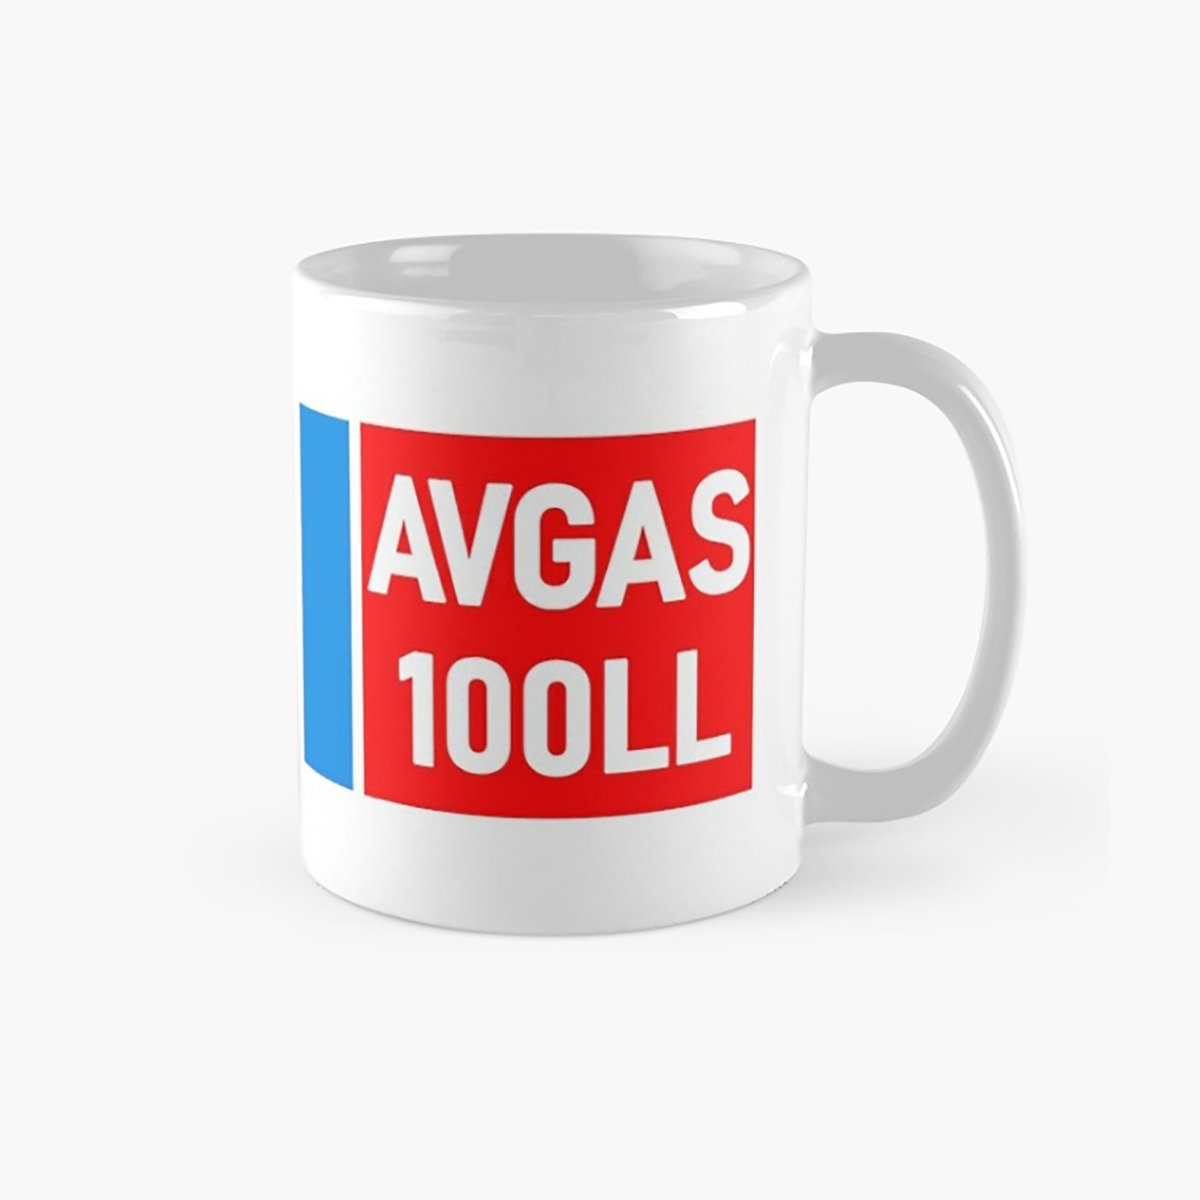 AVGAS 100LL Mug